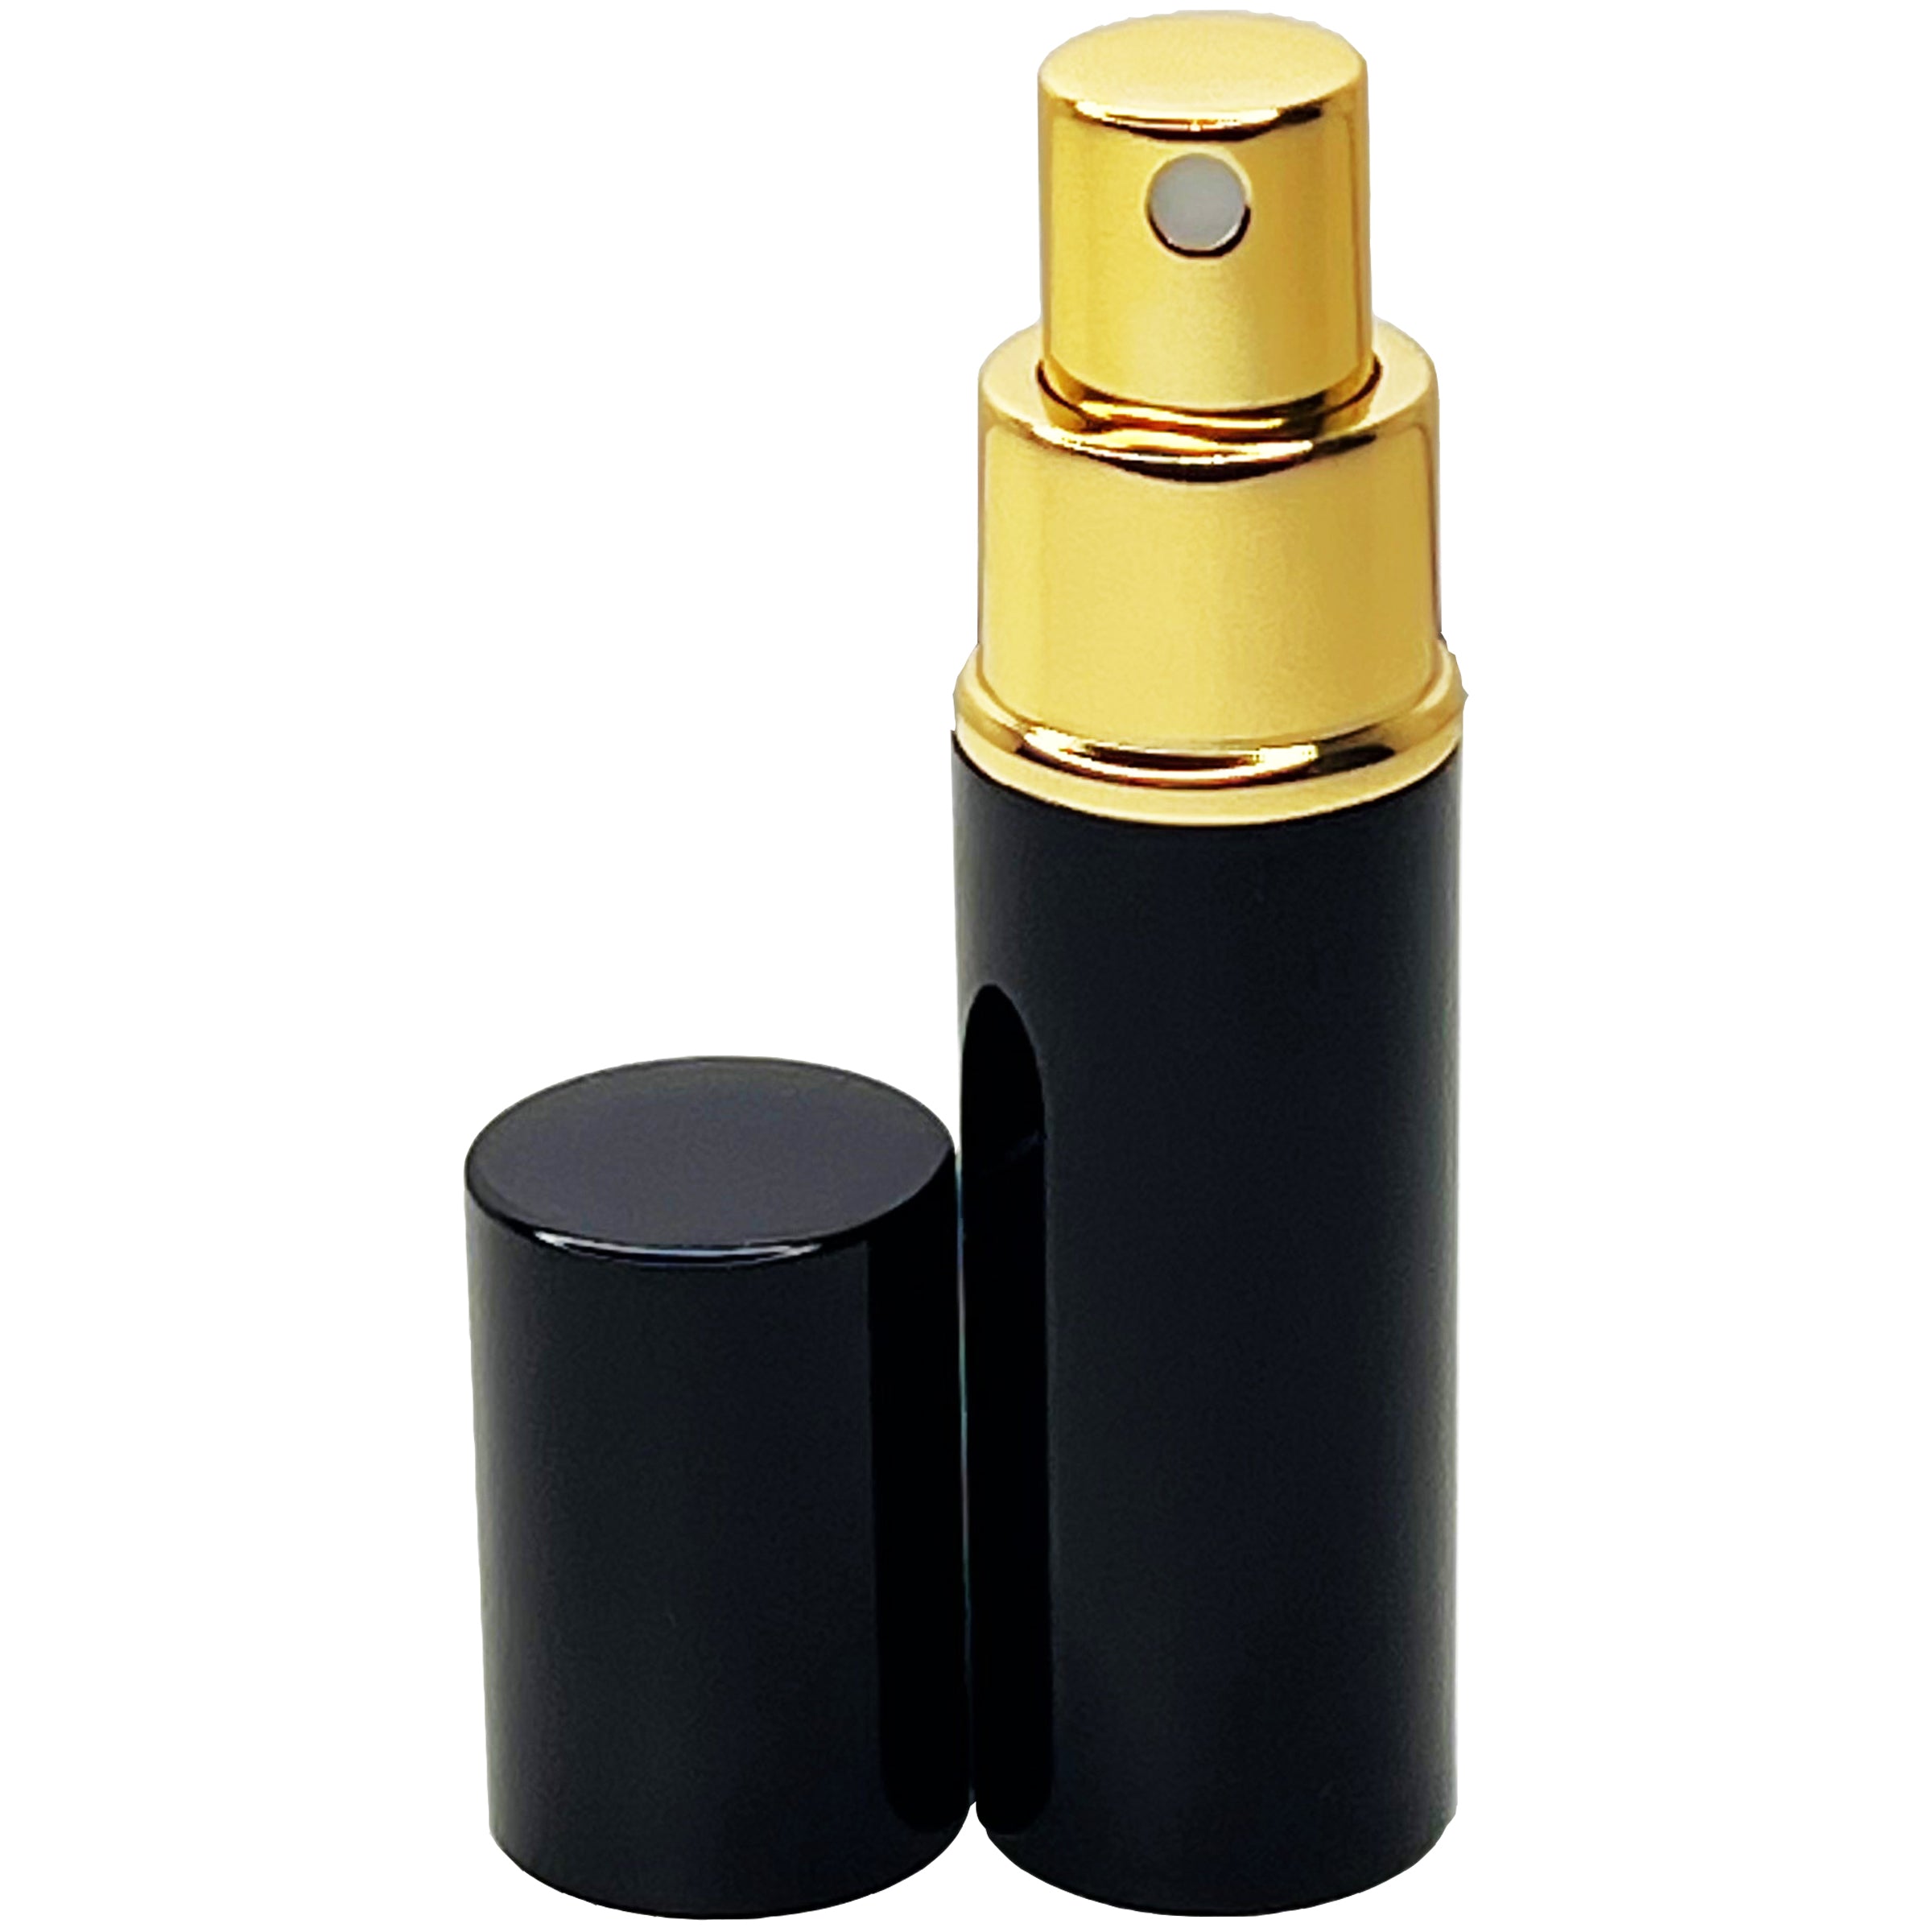 10ml 0.33oz high end aluminum black shell glass perfume bottles sprayers